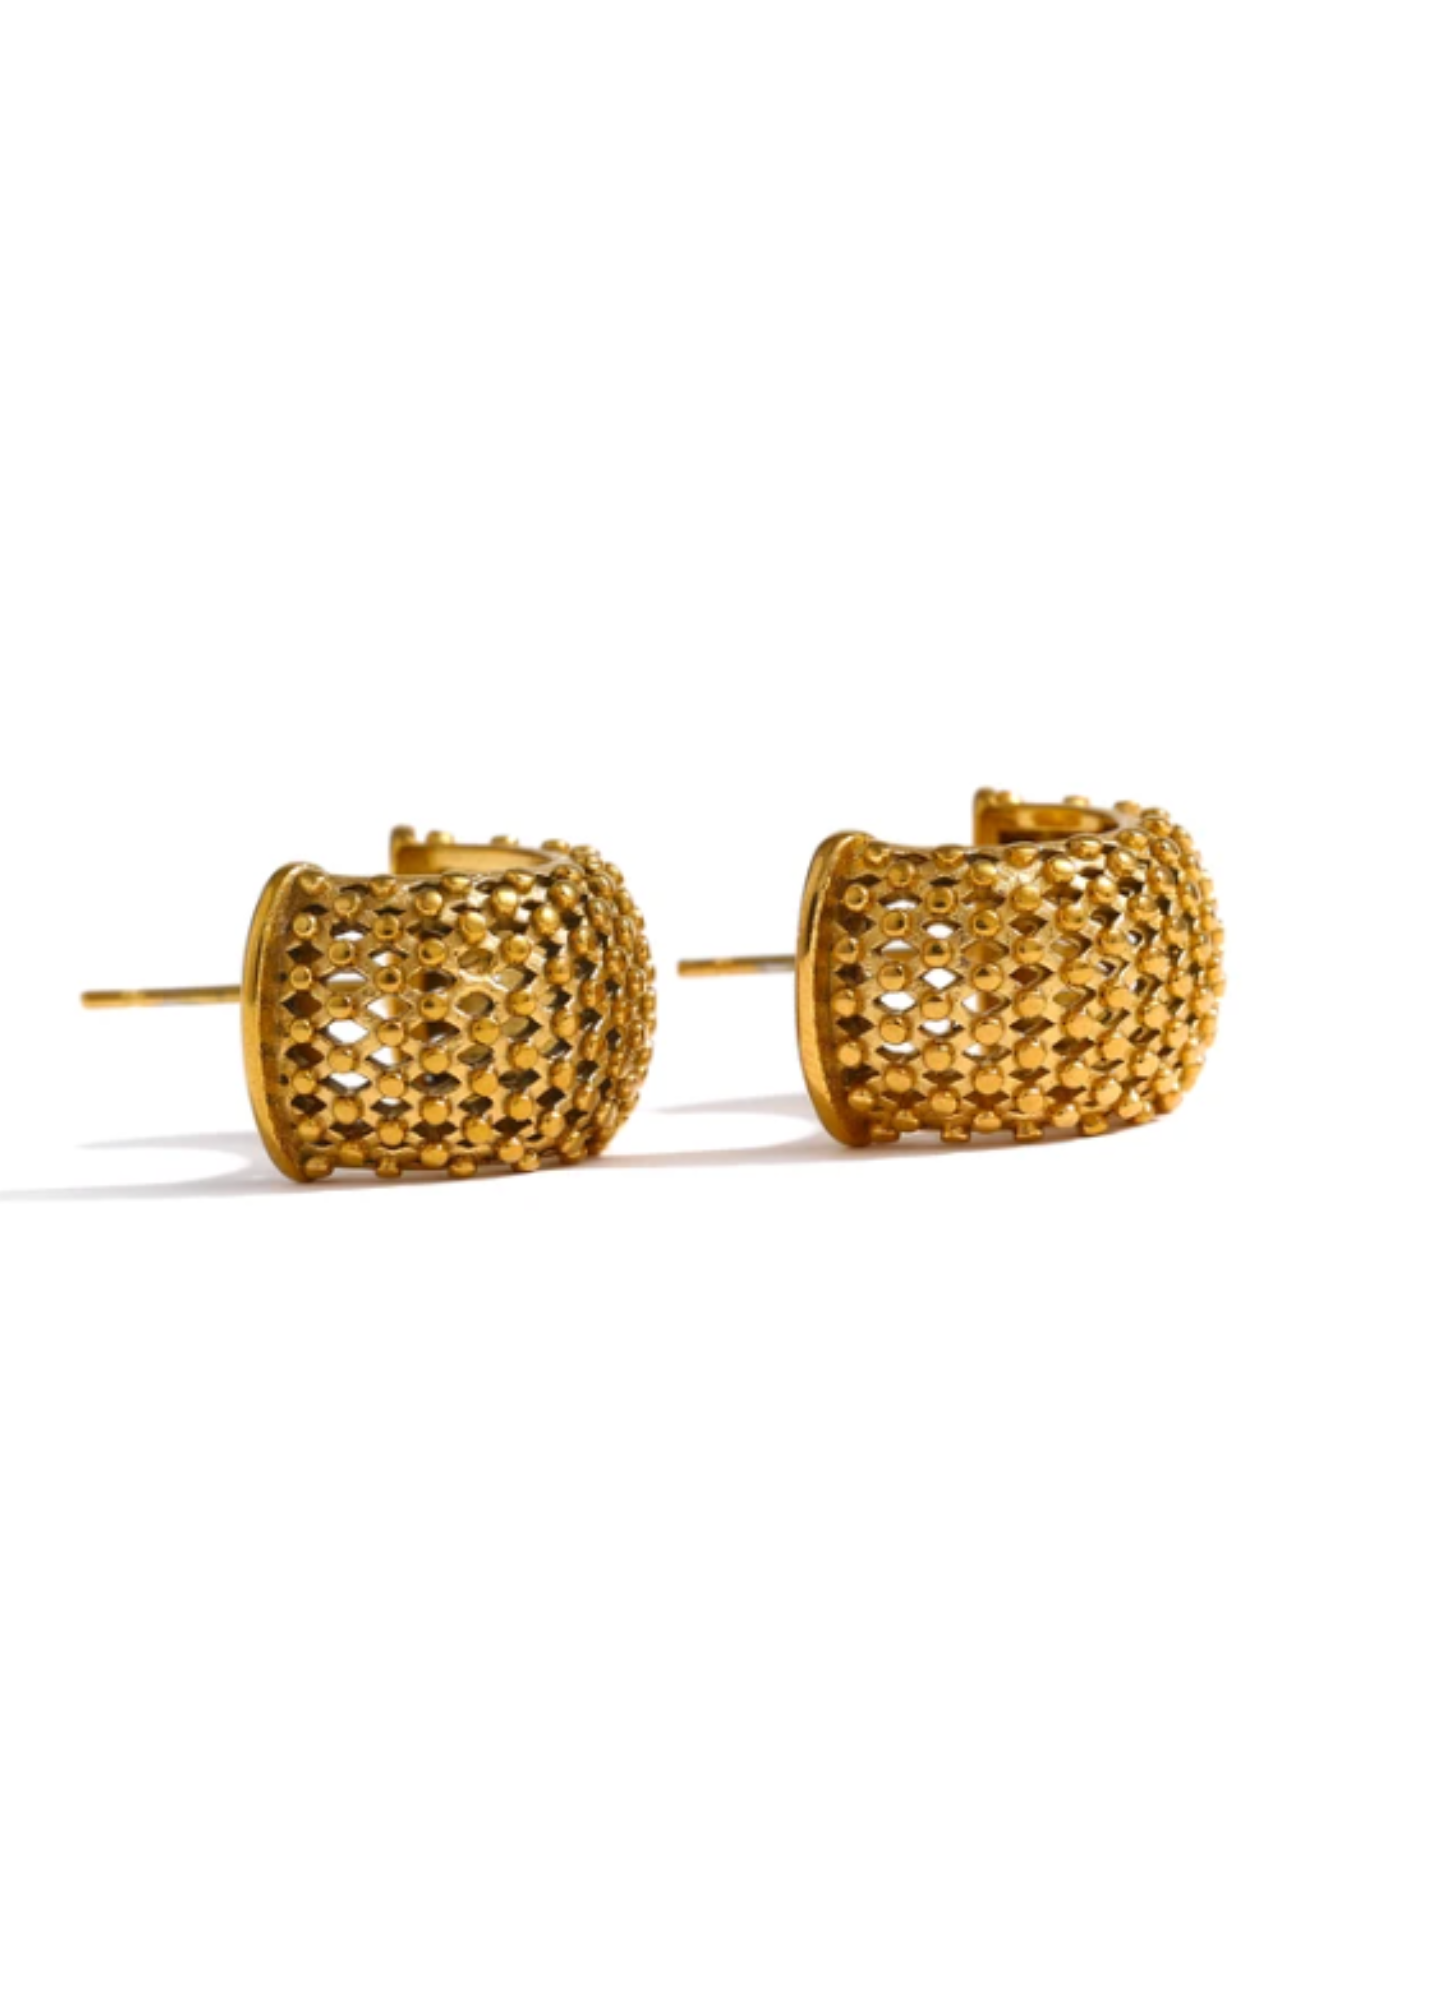 The Gold Chain Cuff Earring Momera Goondiwindi